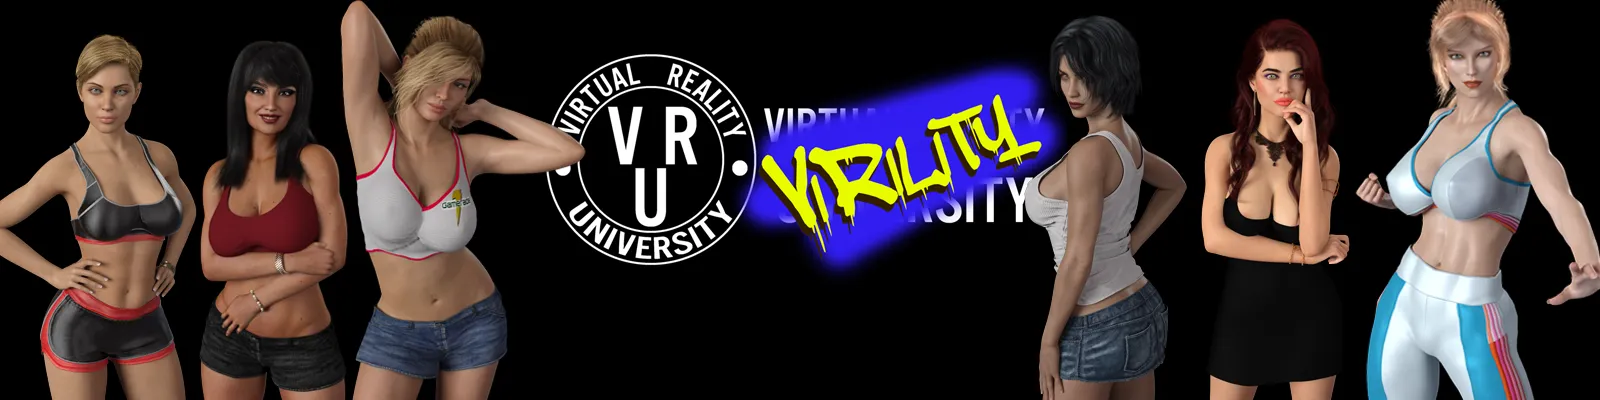 ViRility [vstoryteller]